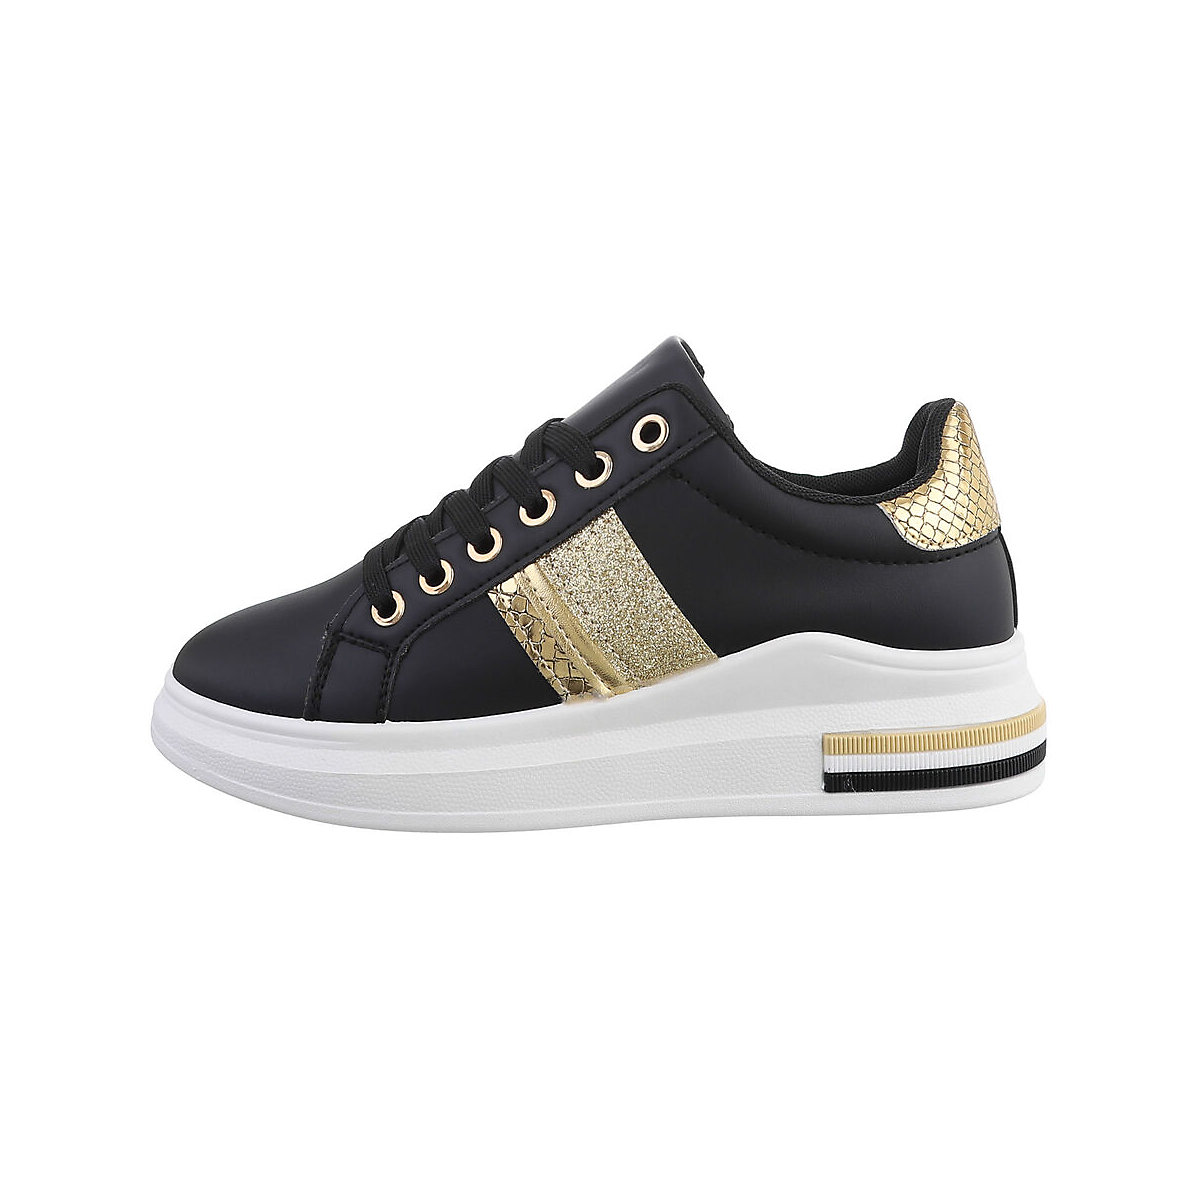 Ital-Design Sneakers Low Lochschnürung Keilabsatz/Wedge Metallisch schwarz/gold